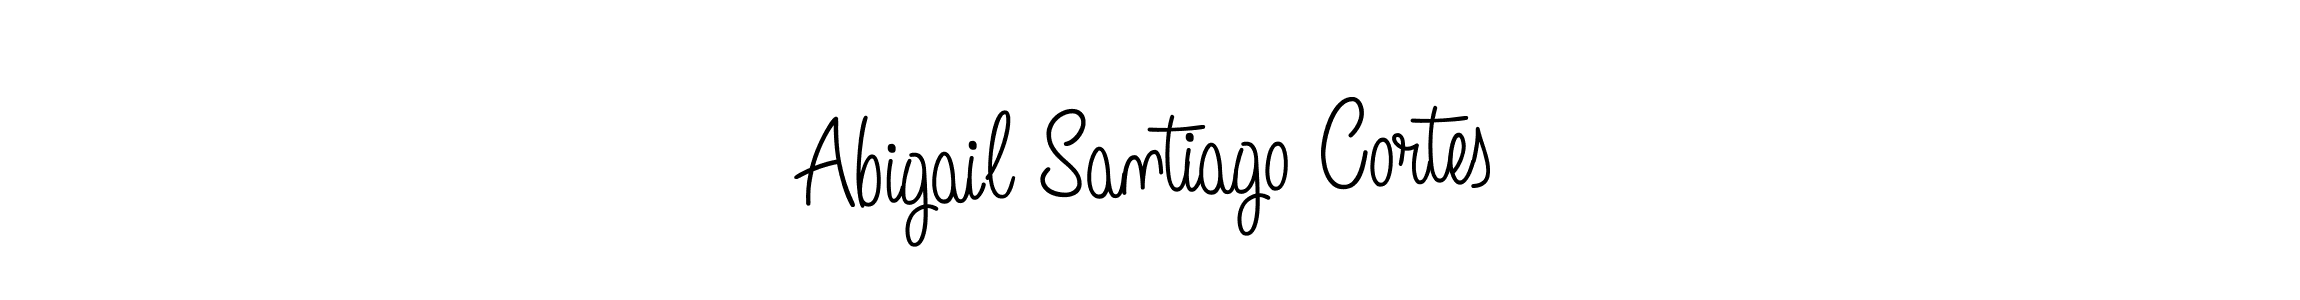 Best and Professional Signature Style for Abigail Santiago Cortes. Angelique-Rose-font-FFP Best Signature Style Collection. Abigail Santiago Cortes signature style 5 images and pictures png